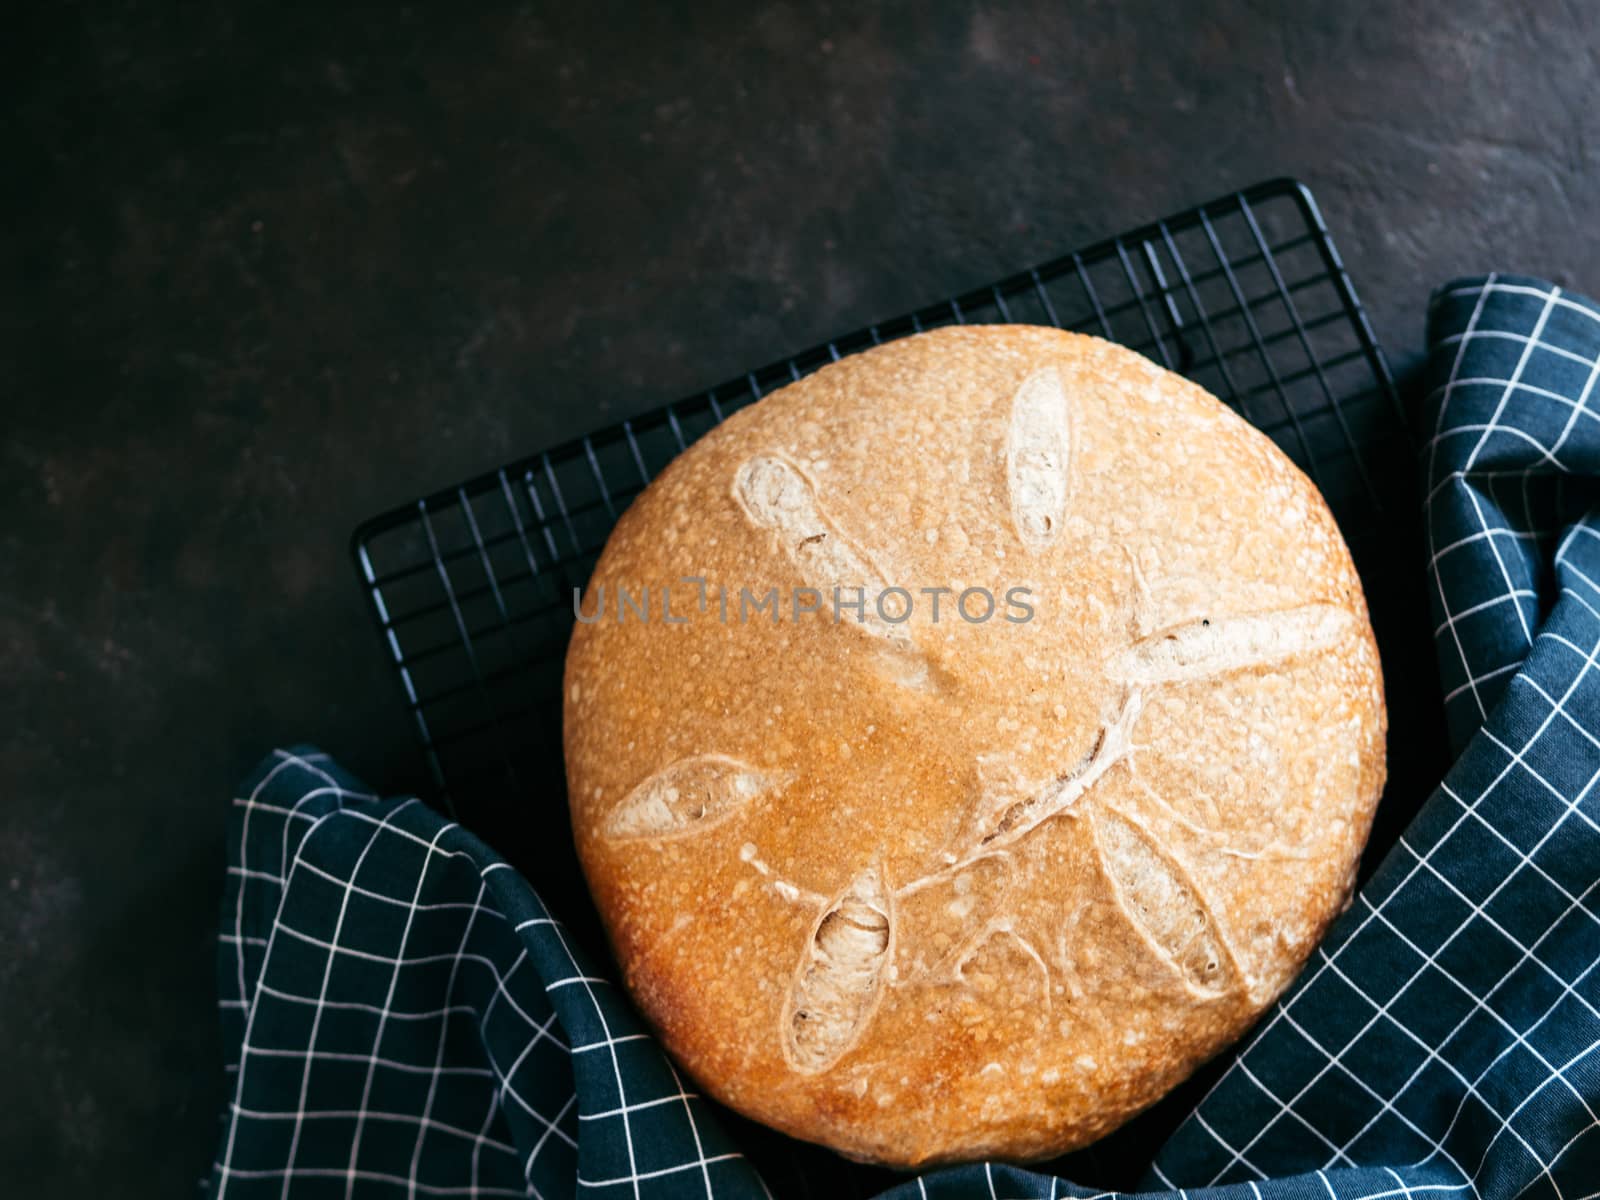 Wheat round sourdough bread. Top view of delicious homemade sourdough bread on black background with copy space. Home made sourdough bread making concept.